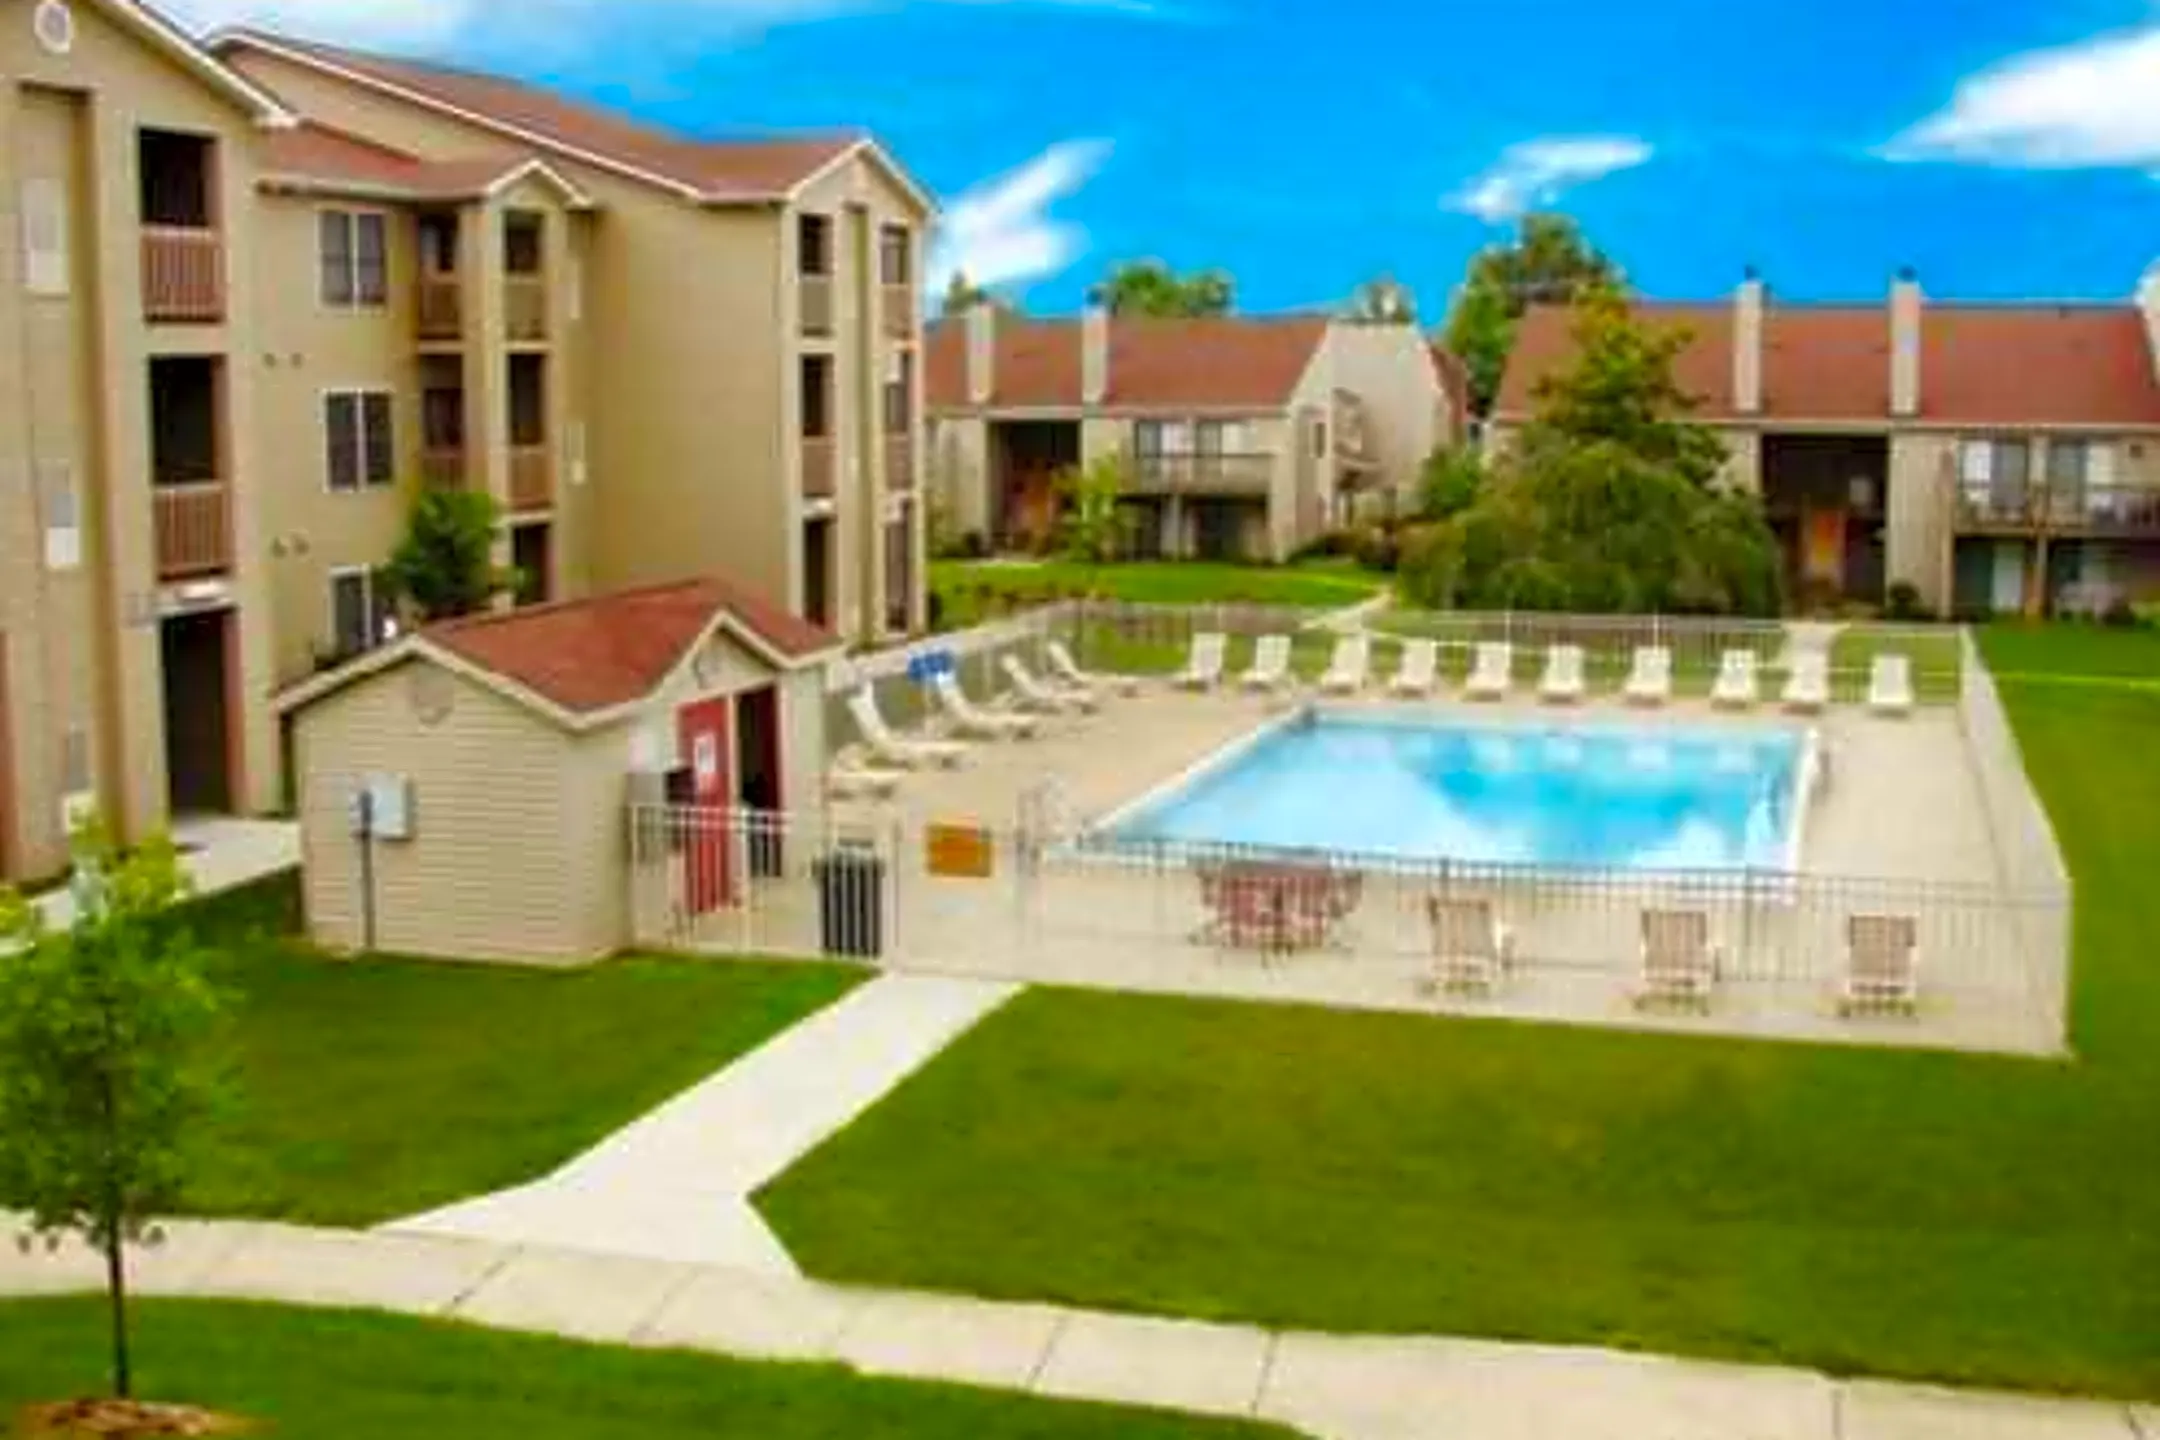 Pool - Park Hill Apartments - Lexington, KY